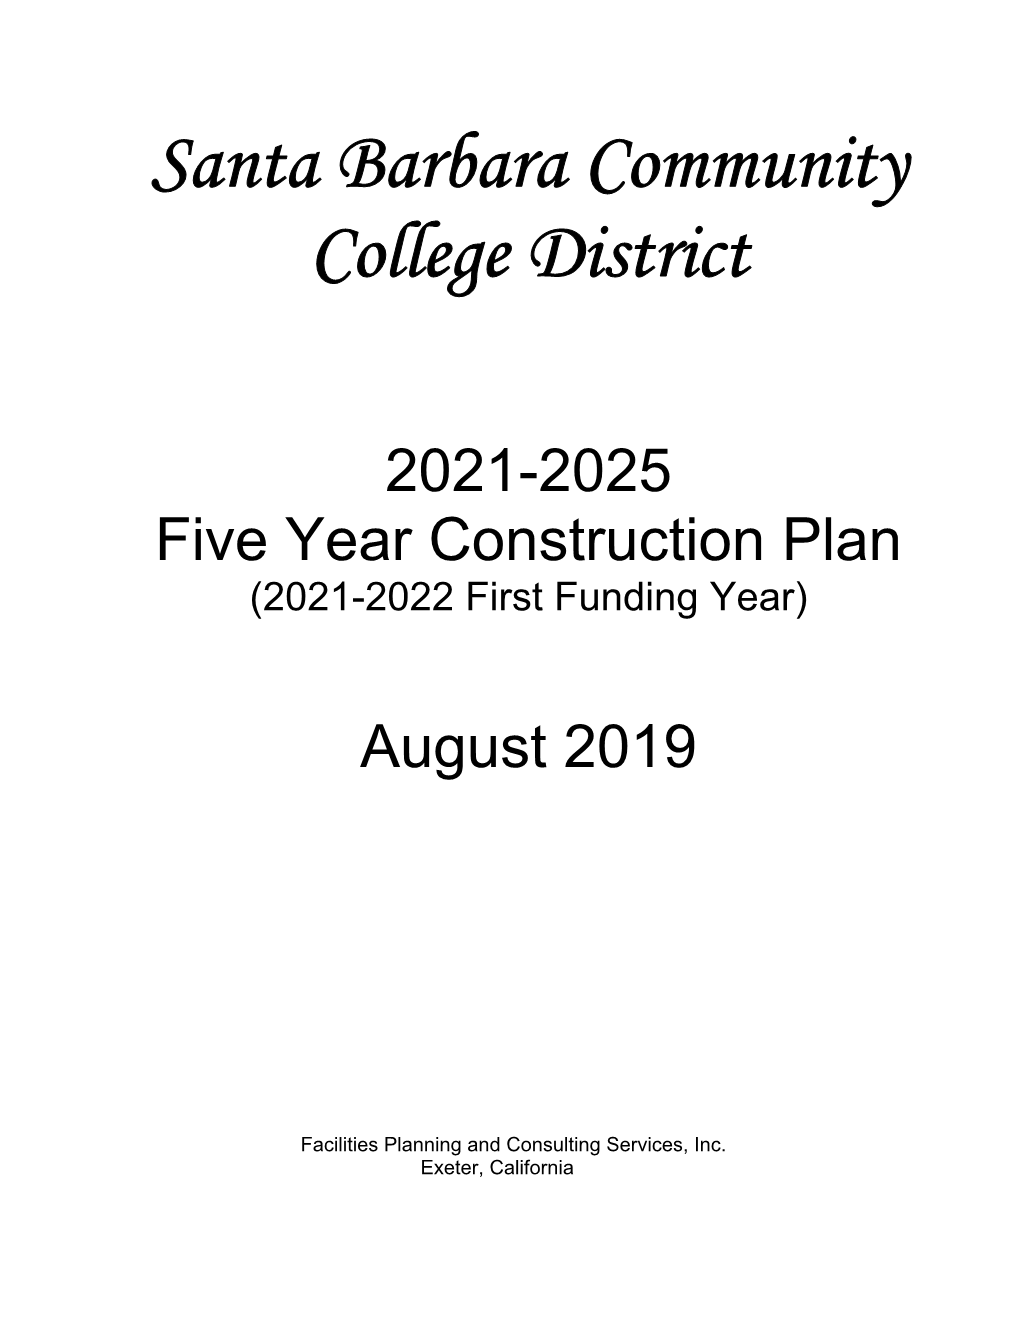 Santa Barbara Community College District